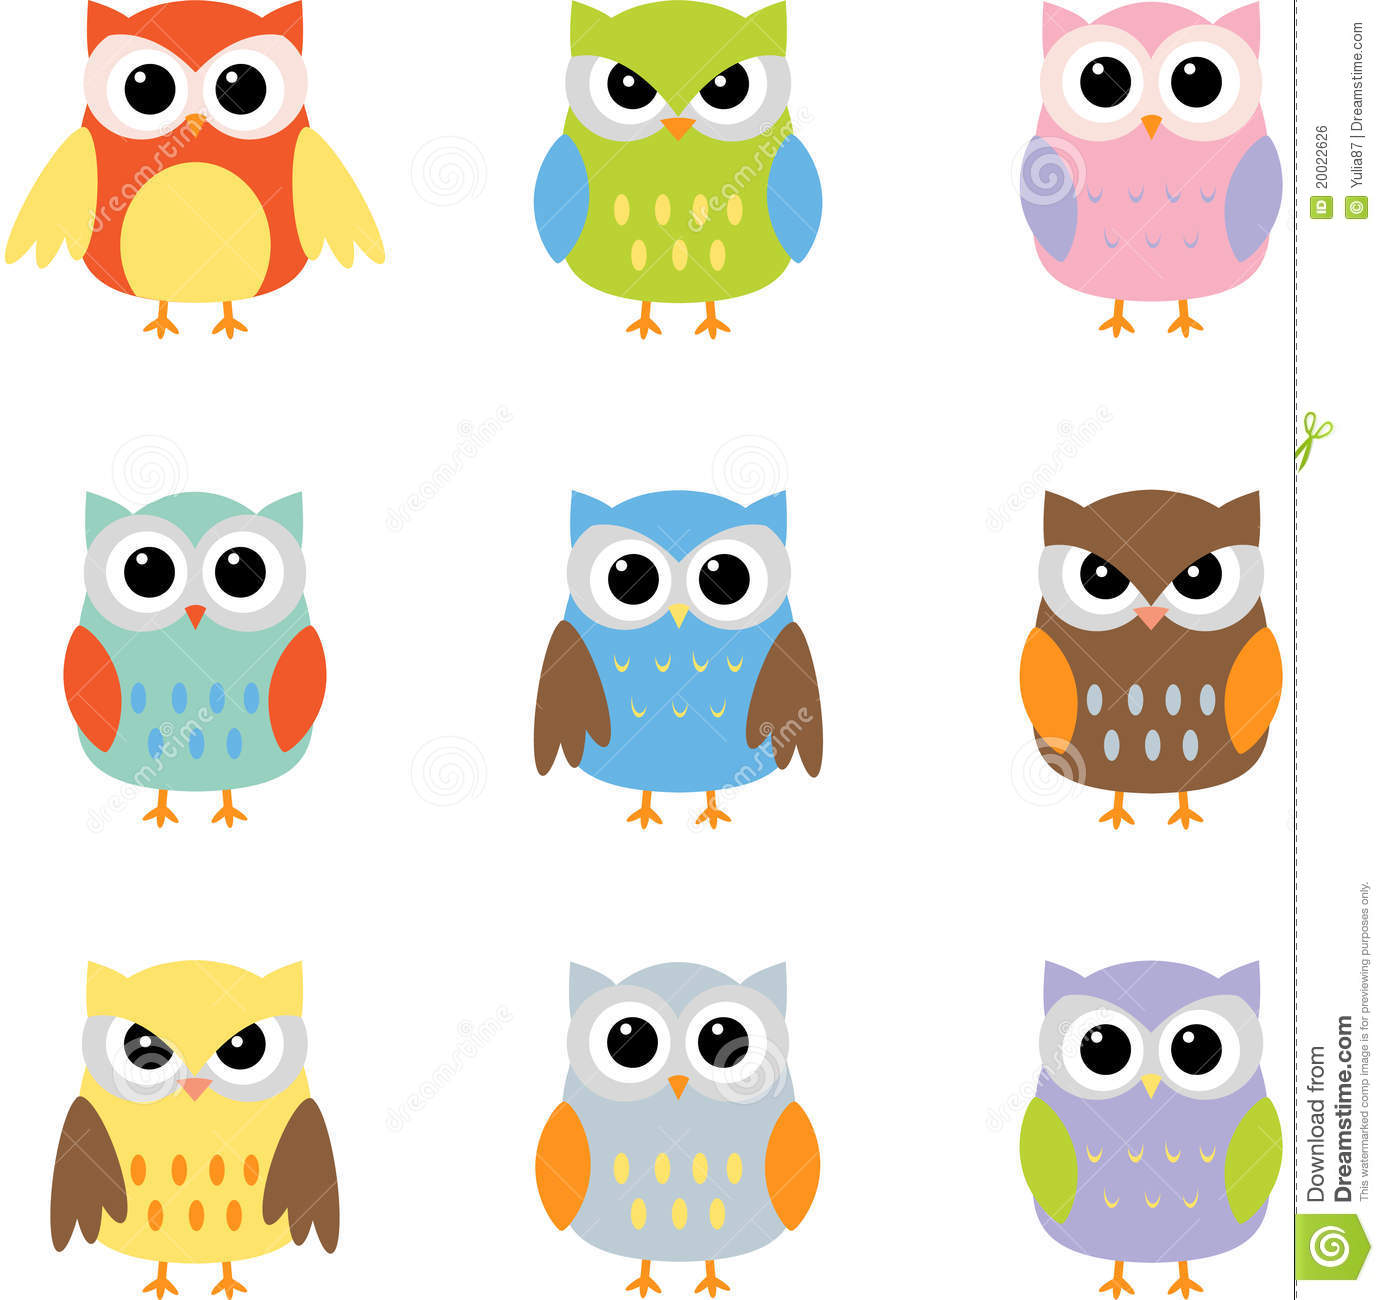 free clip art animals owl